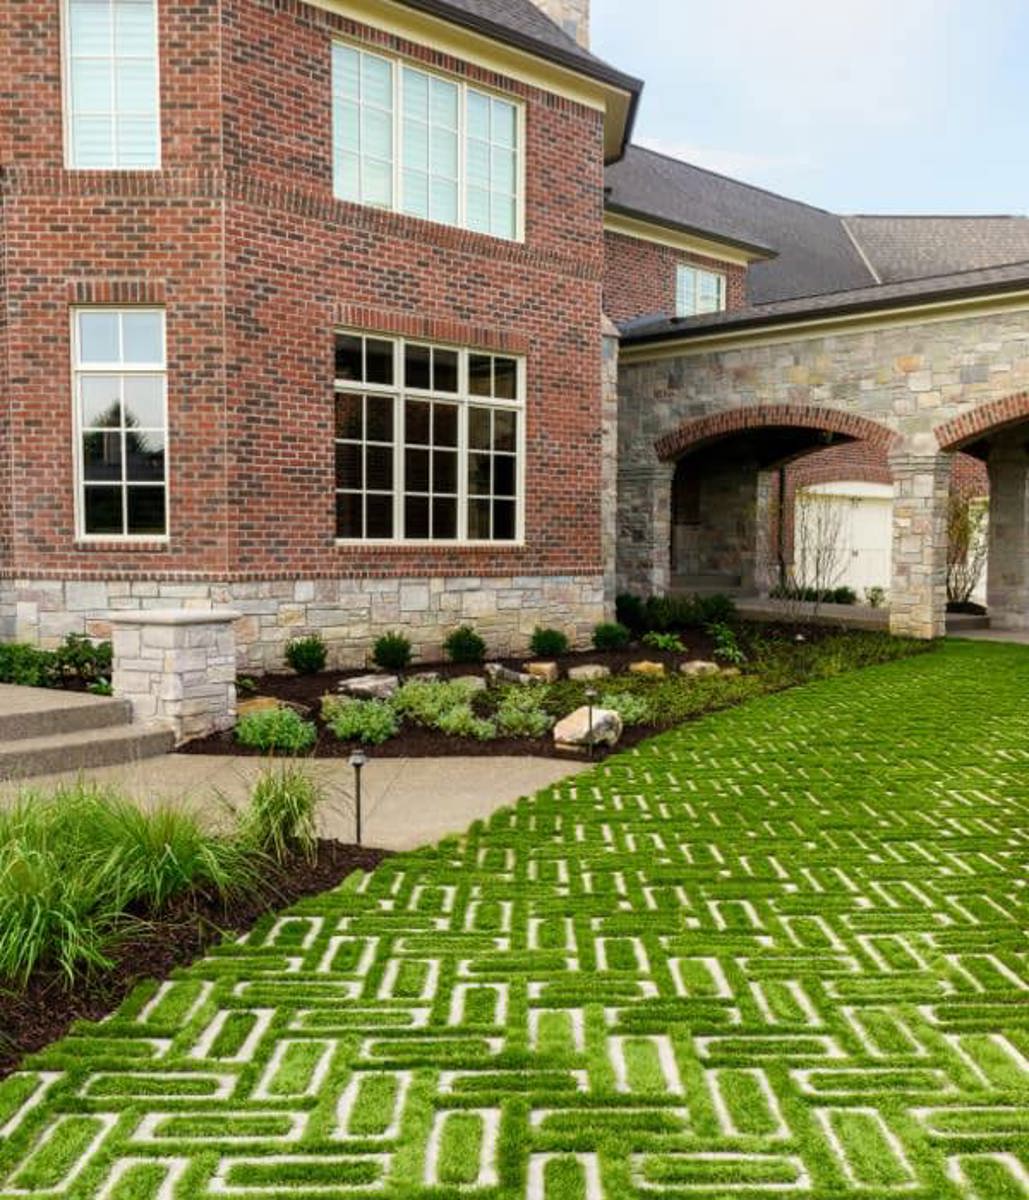 Techo bloc permeable pavement frontyard walkway pavers grass aquastorm grey